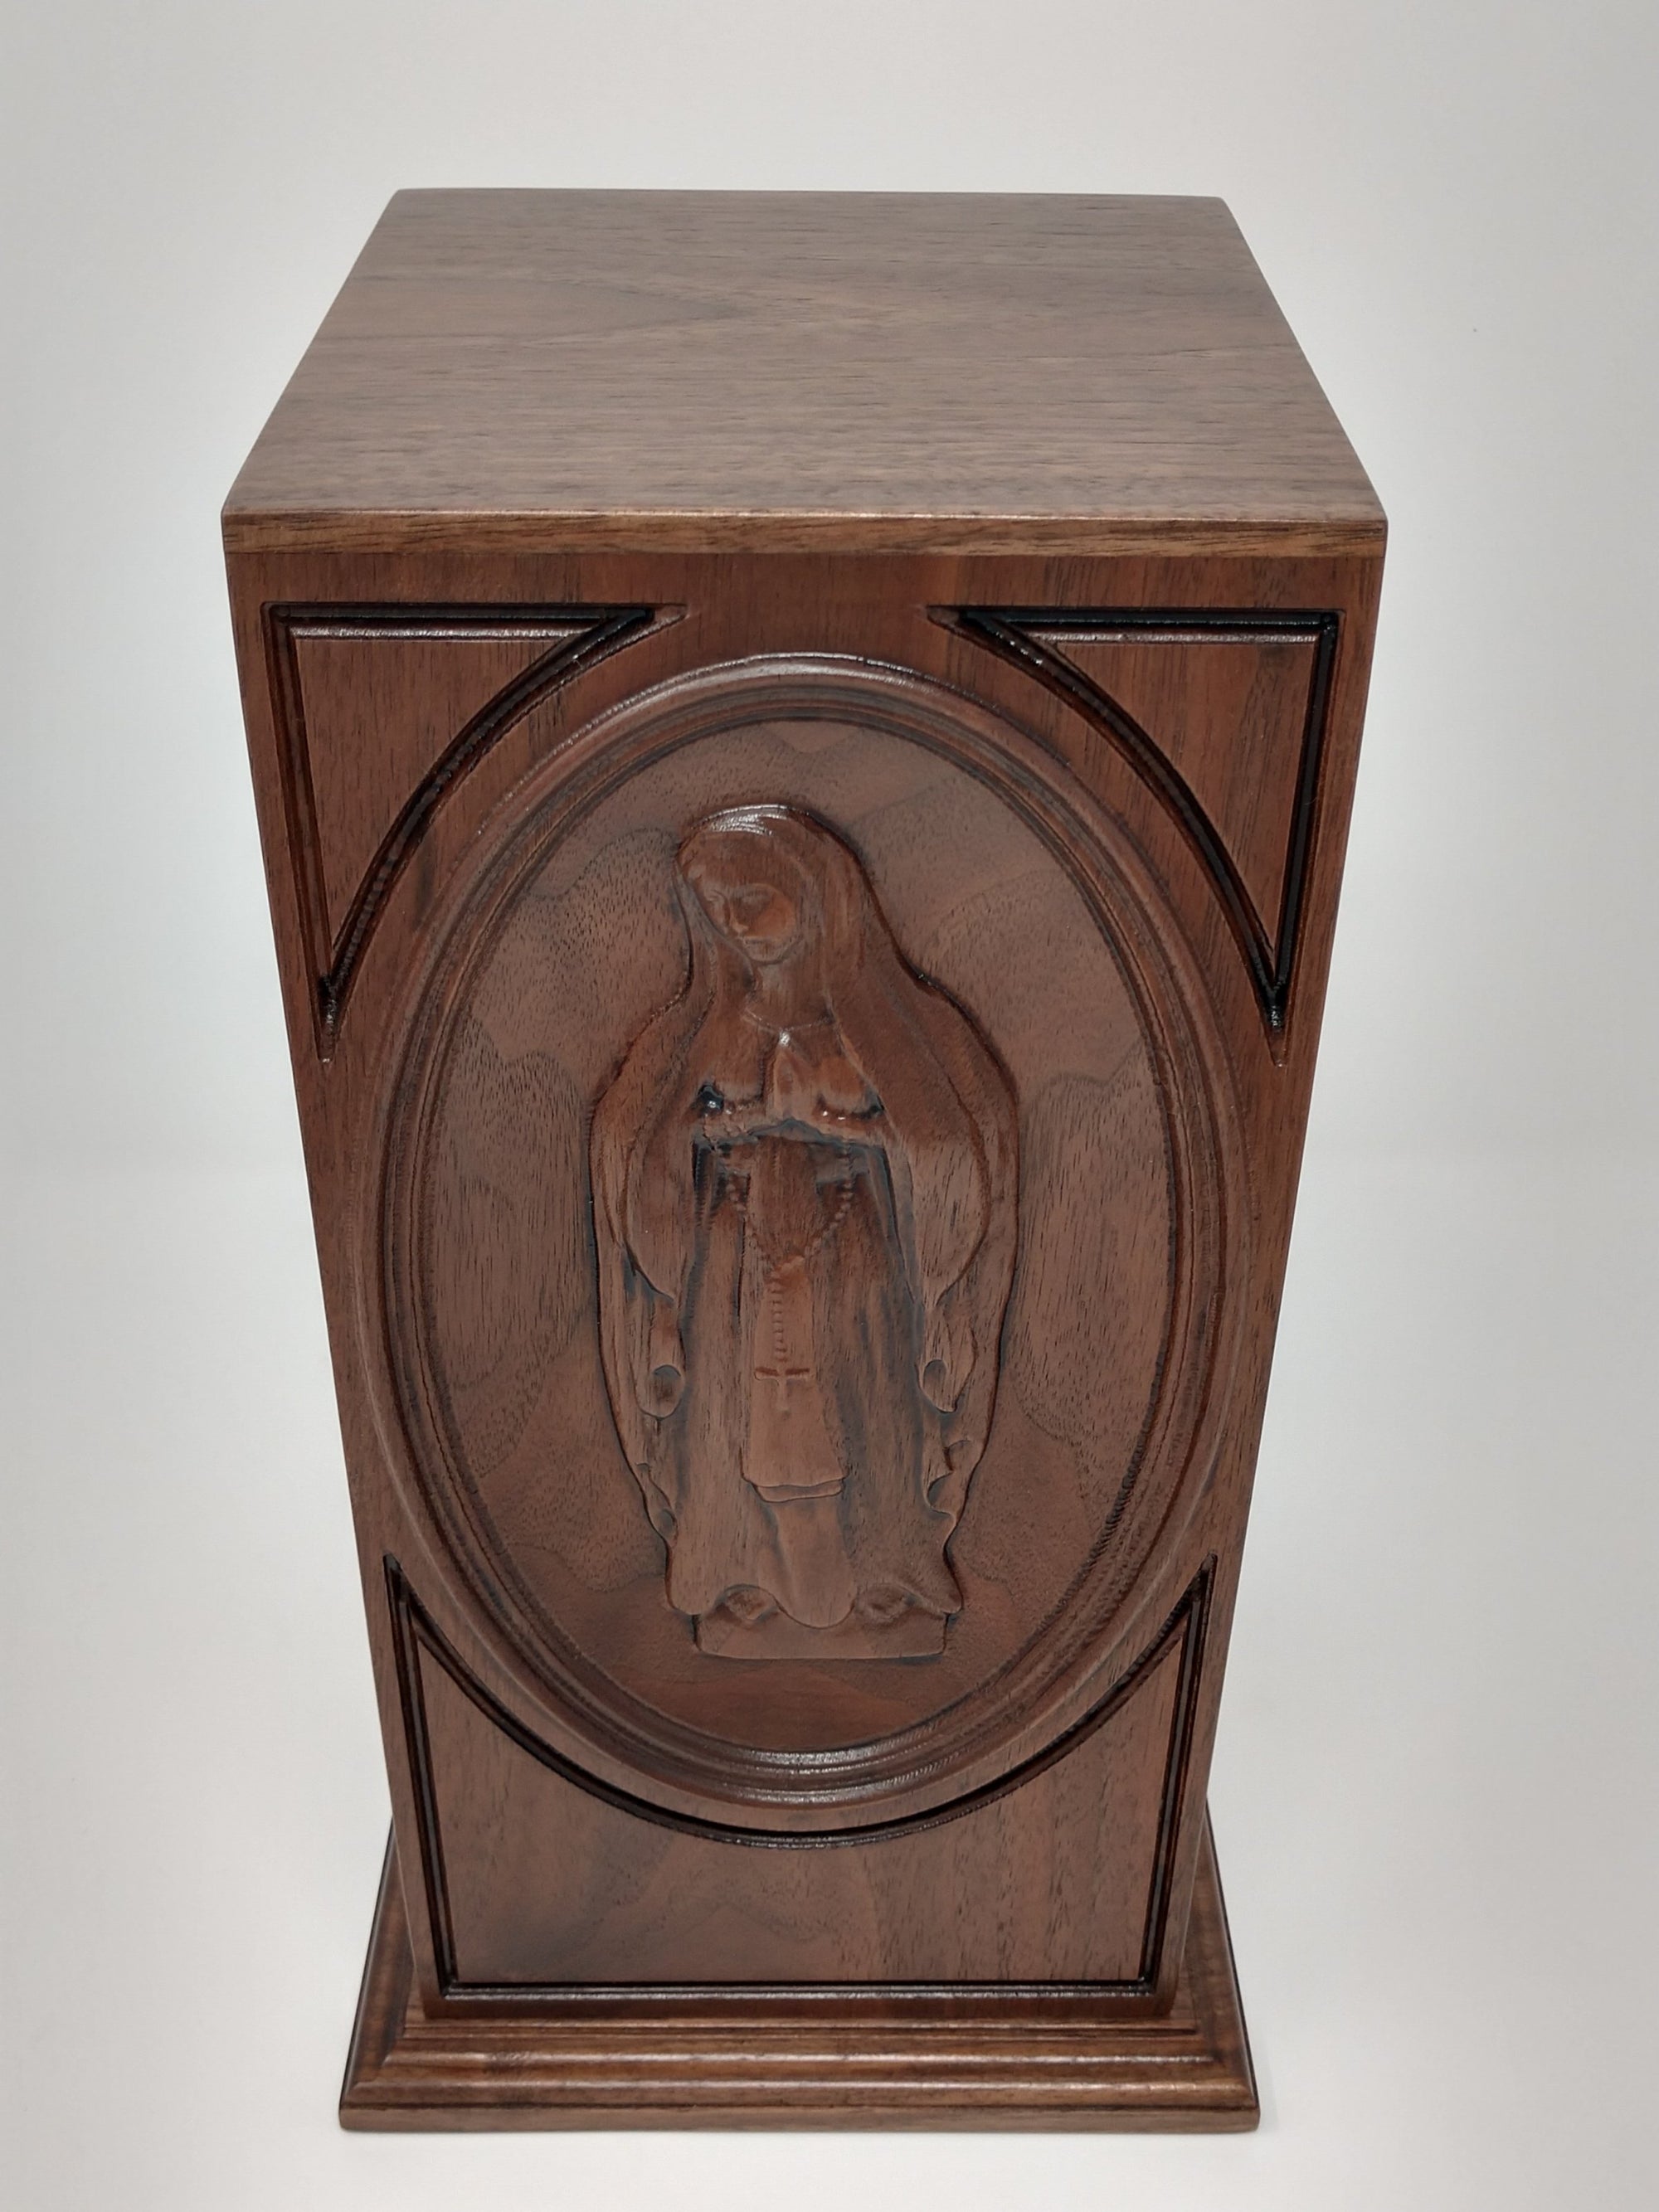 Upright Virgin Mary Urn